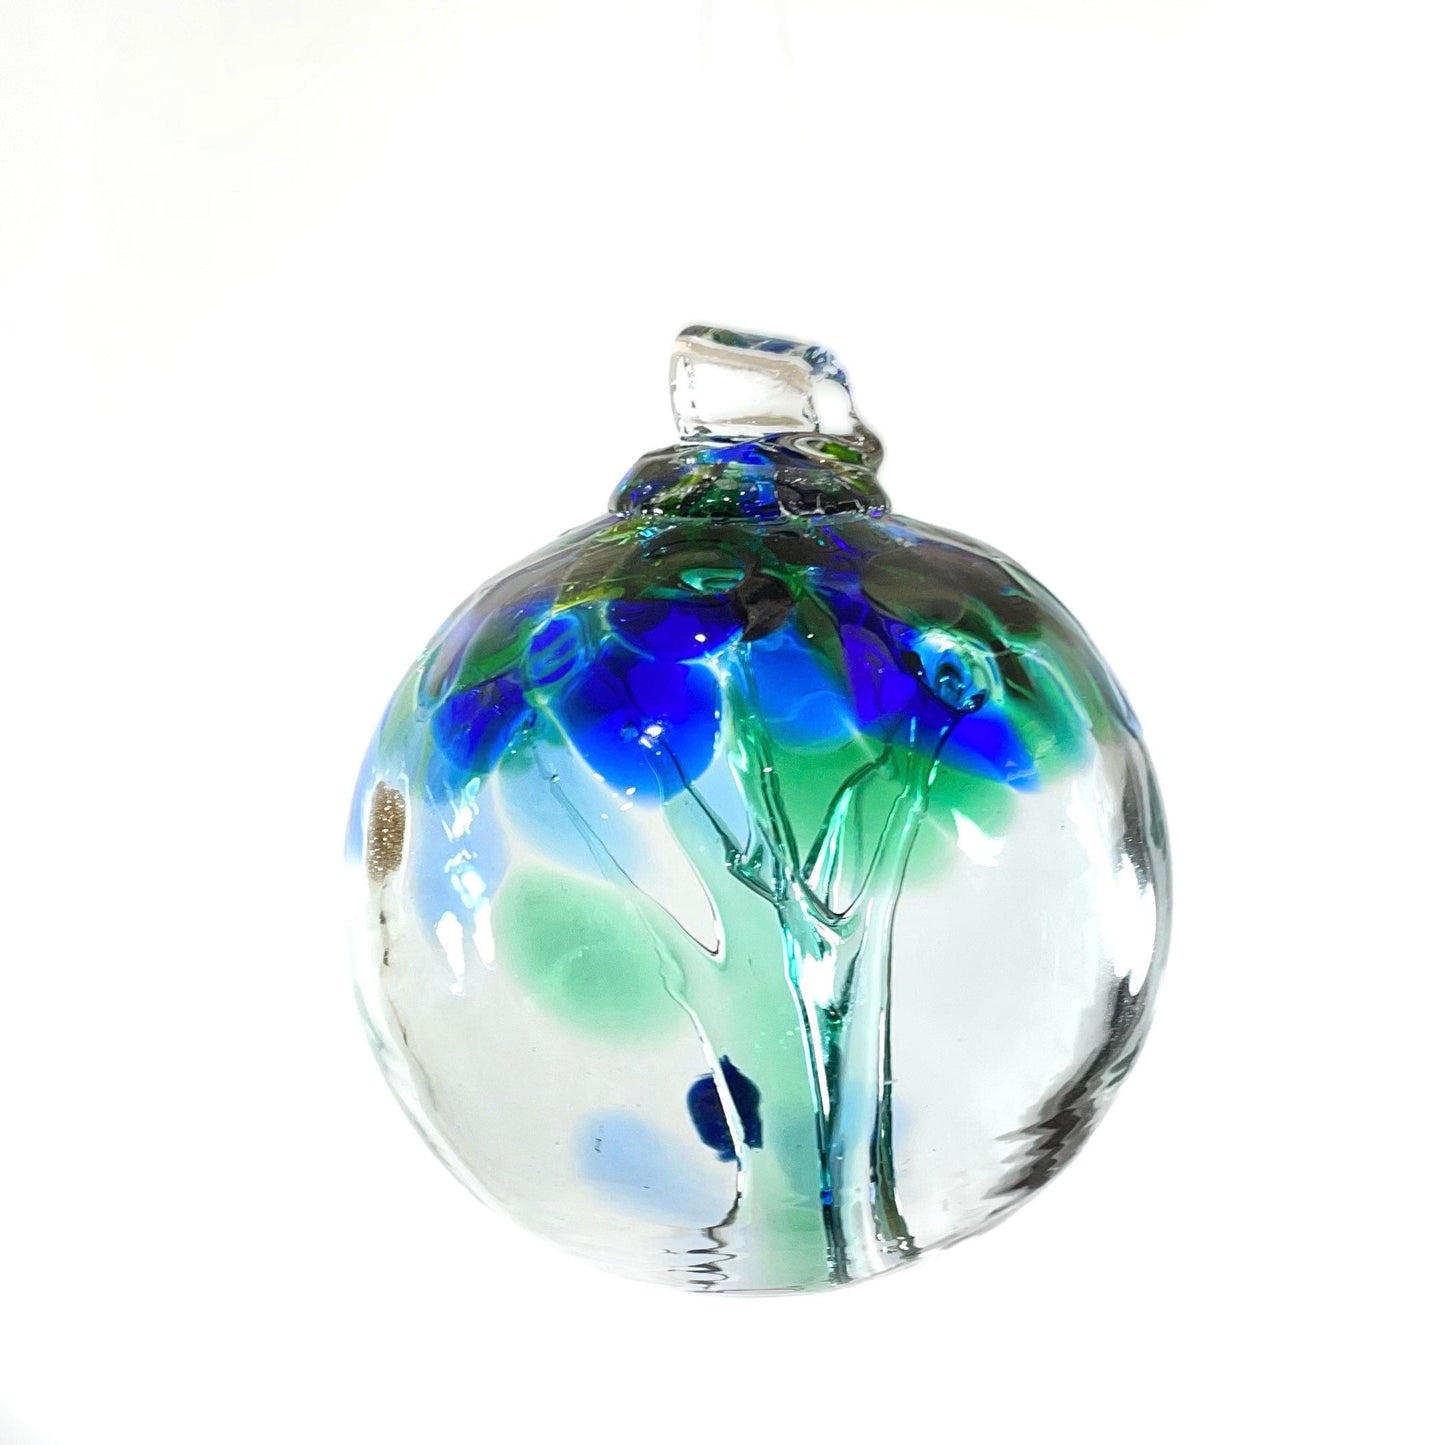 Handmade Glass Art 2” Globe Ornament - Tree of Kindness